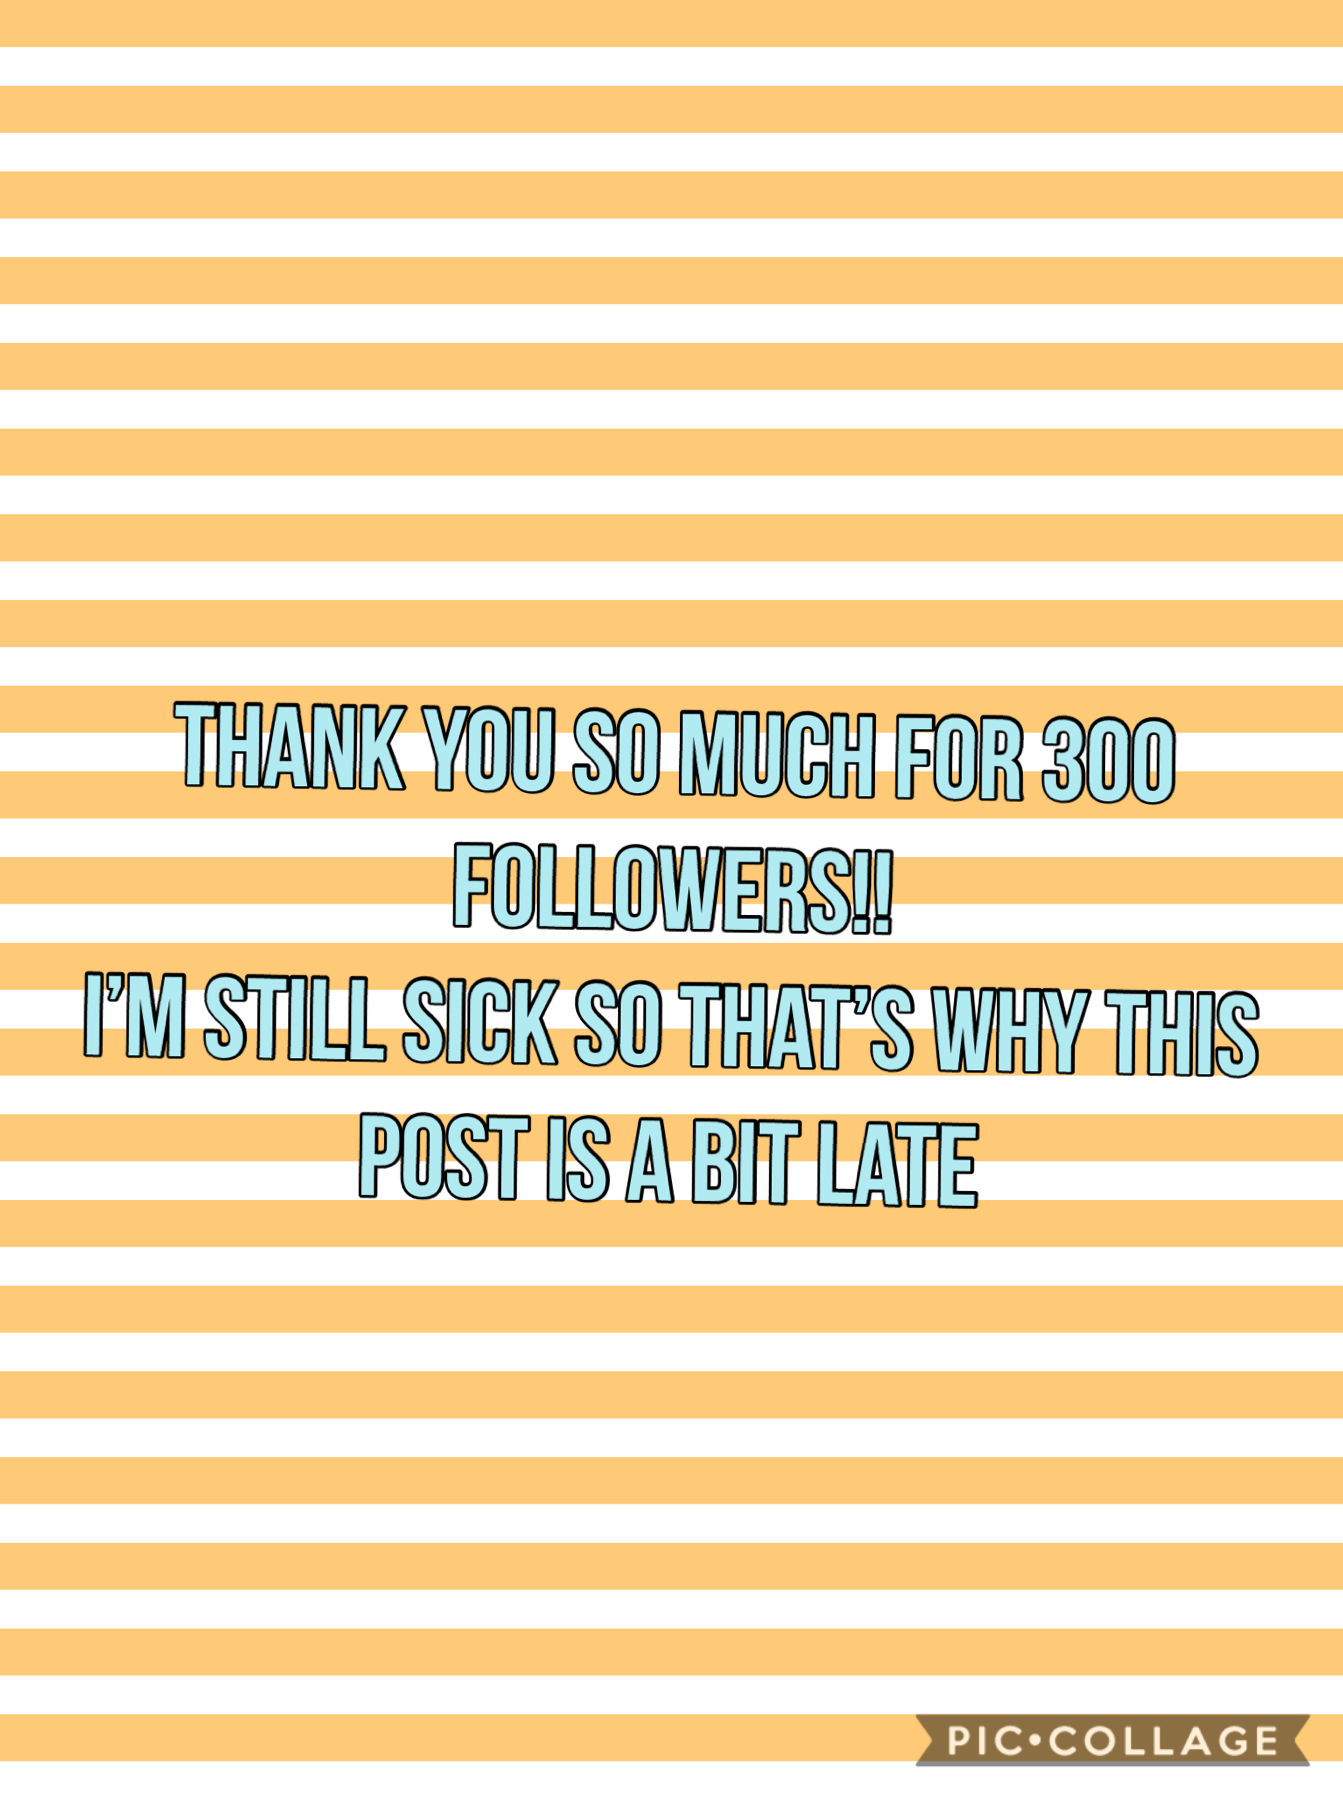 300 followers Yay!